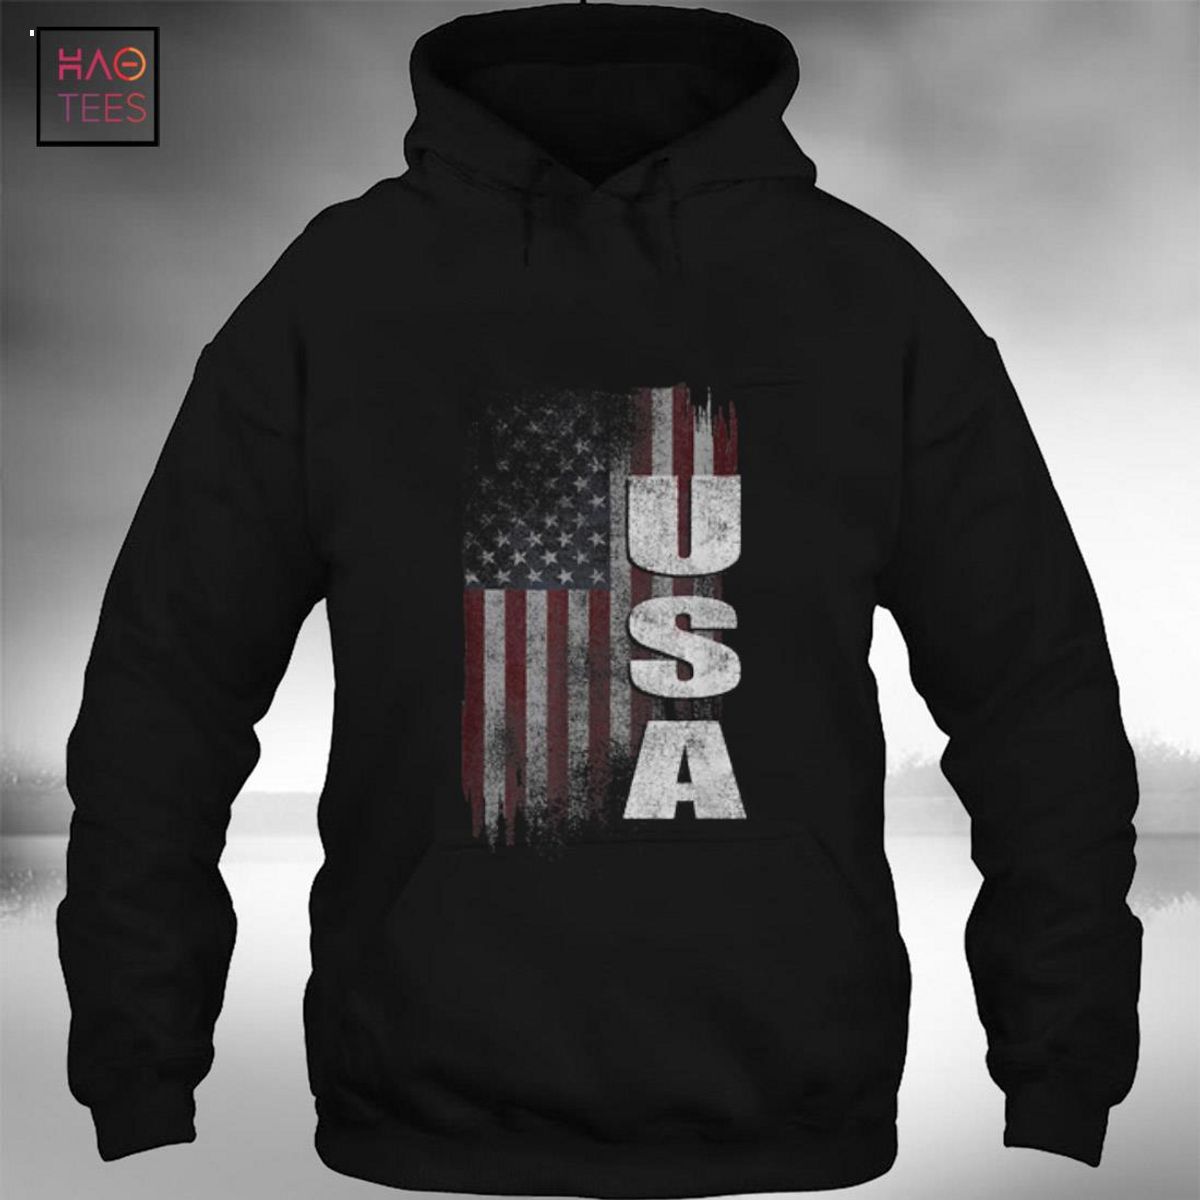 Patriotic Distressed USA American Flag Shirt